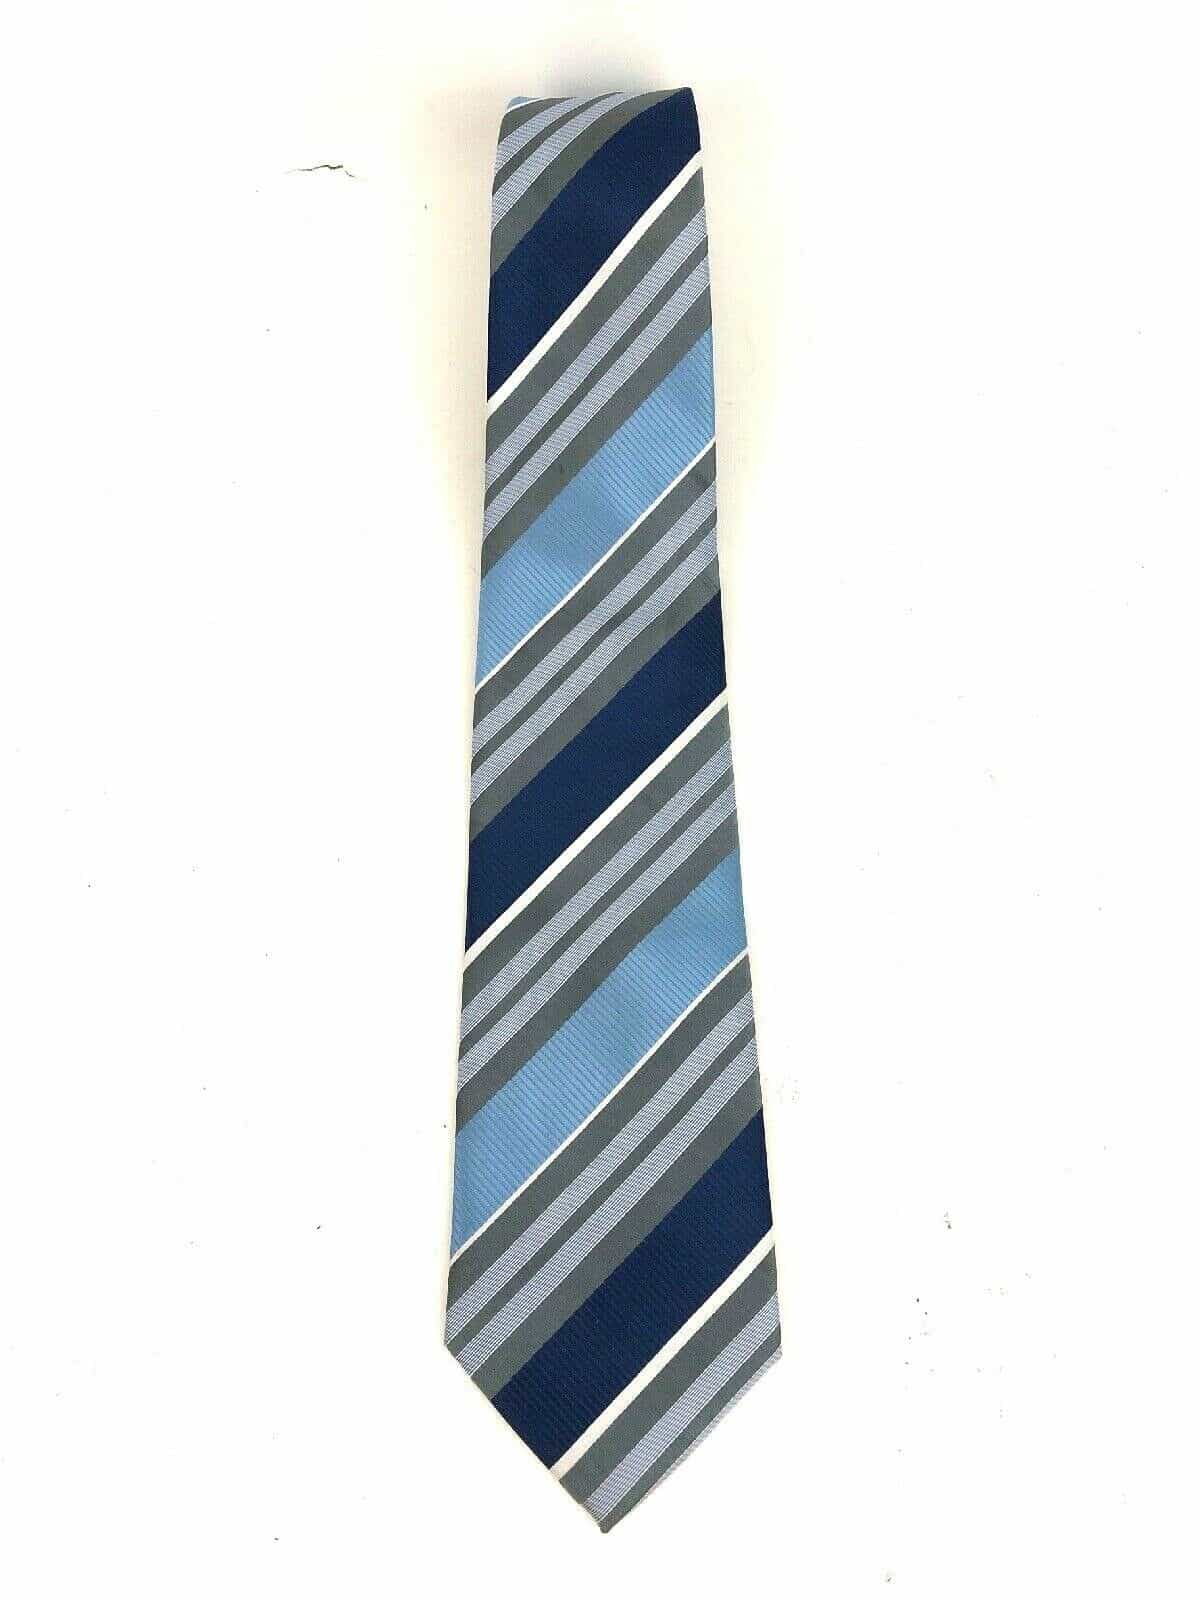 Rucci Chillino Italy Tie Blue and Silver Stripes 100% Polyester 62”